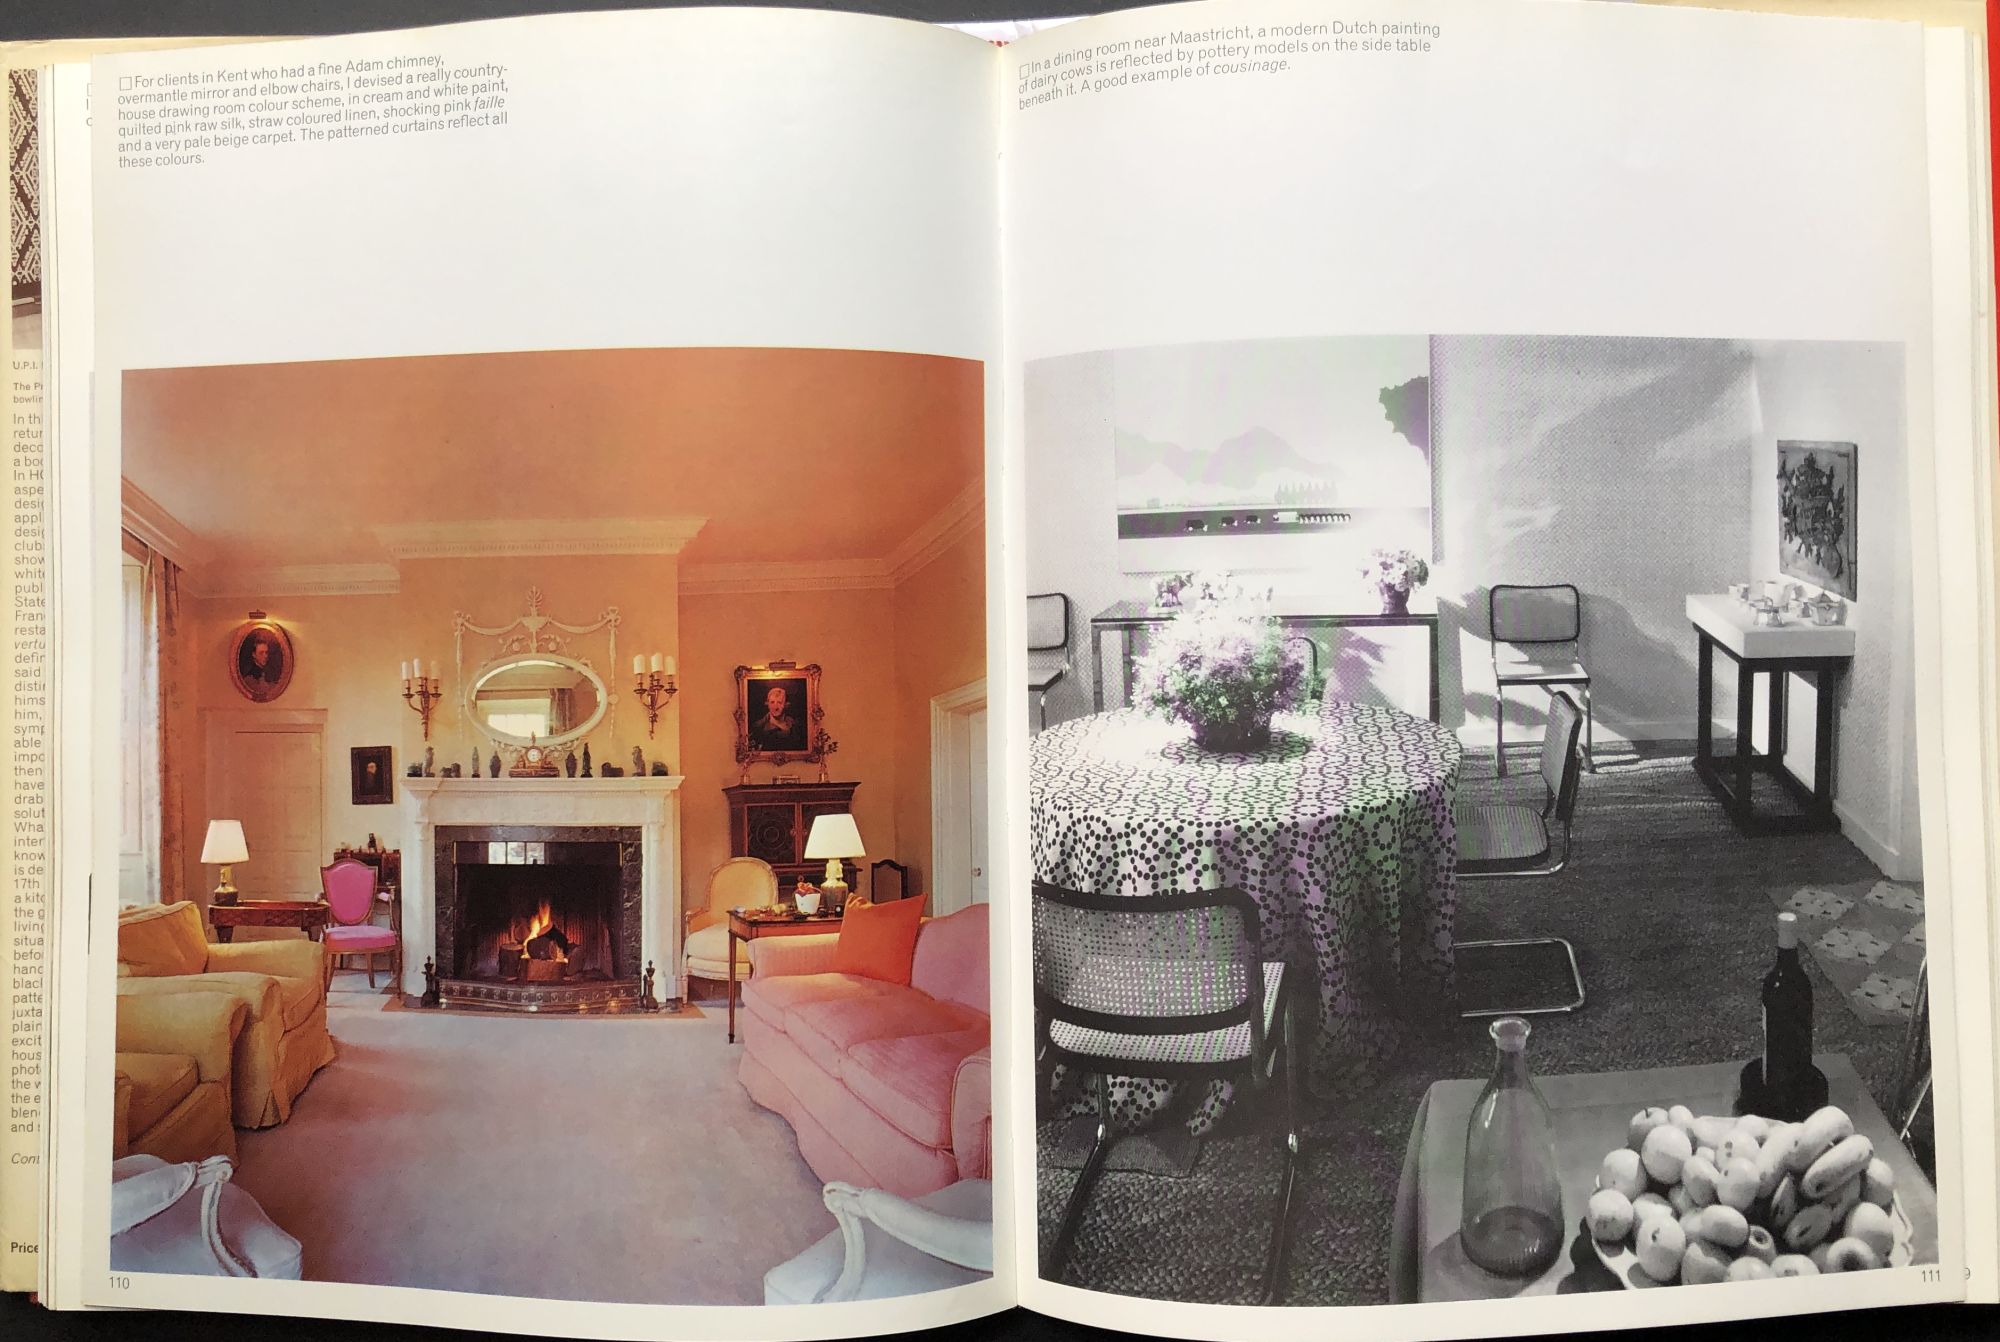 110 Pink interiors ideas  home decor, pink interior, home